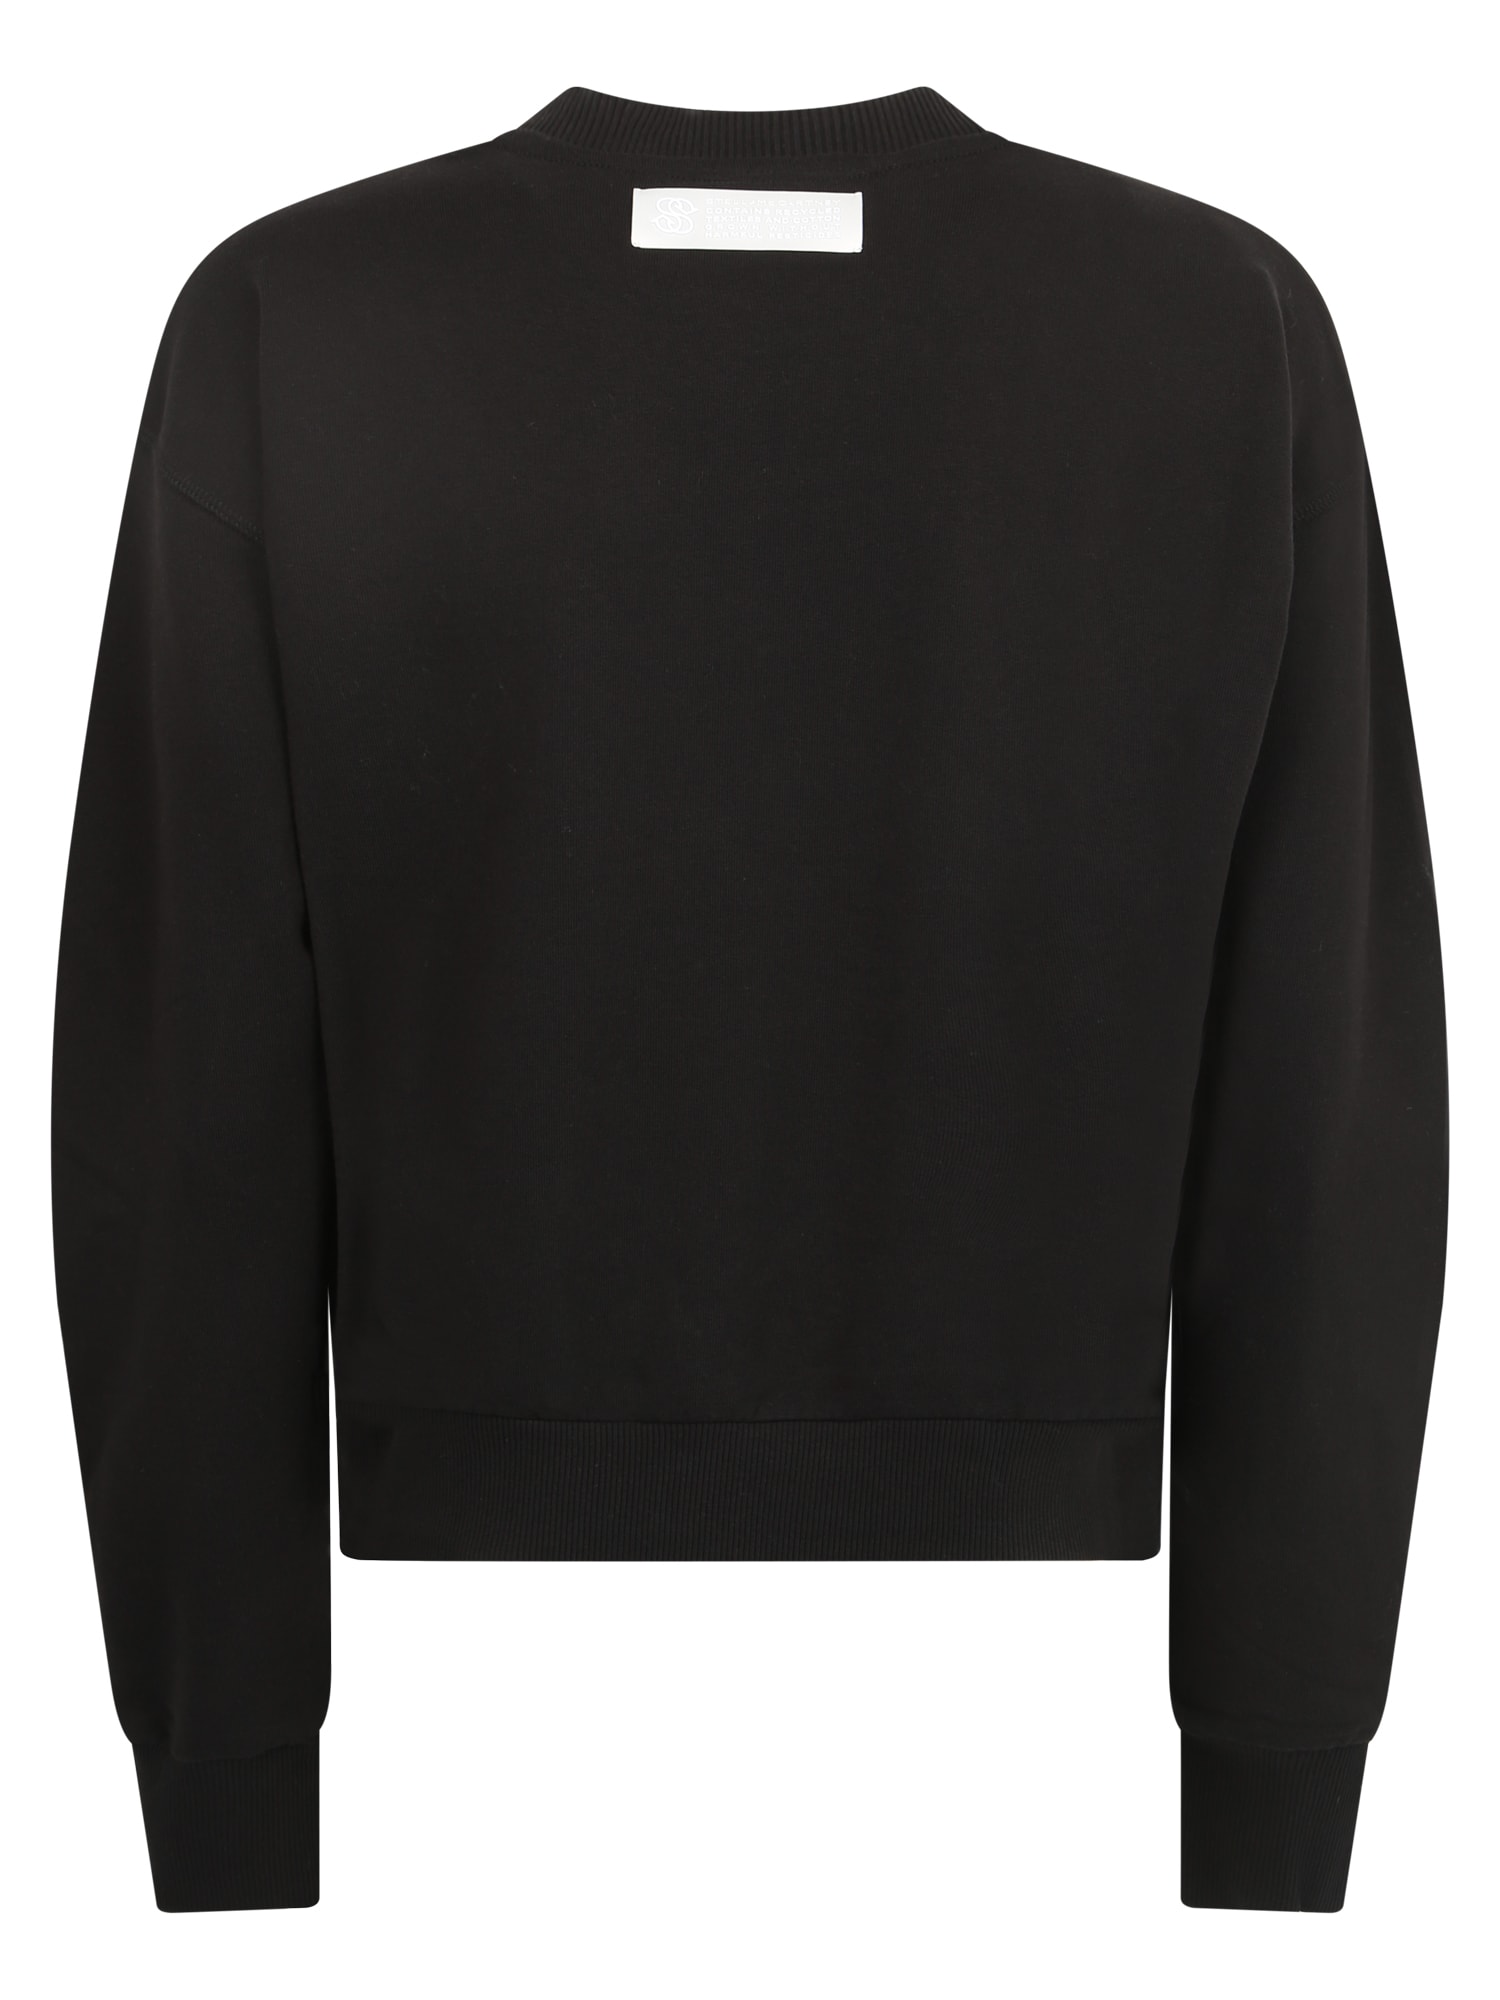 Shop Stella Mccartney Smile Bunny Sweatshirt In Black